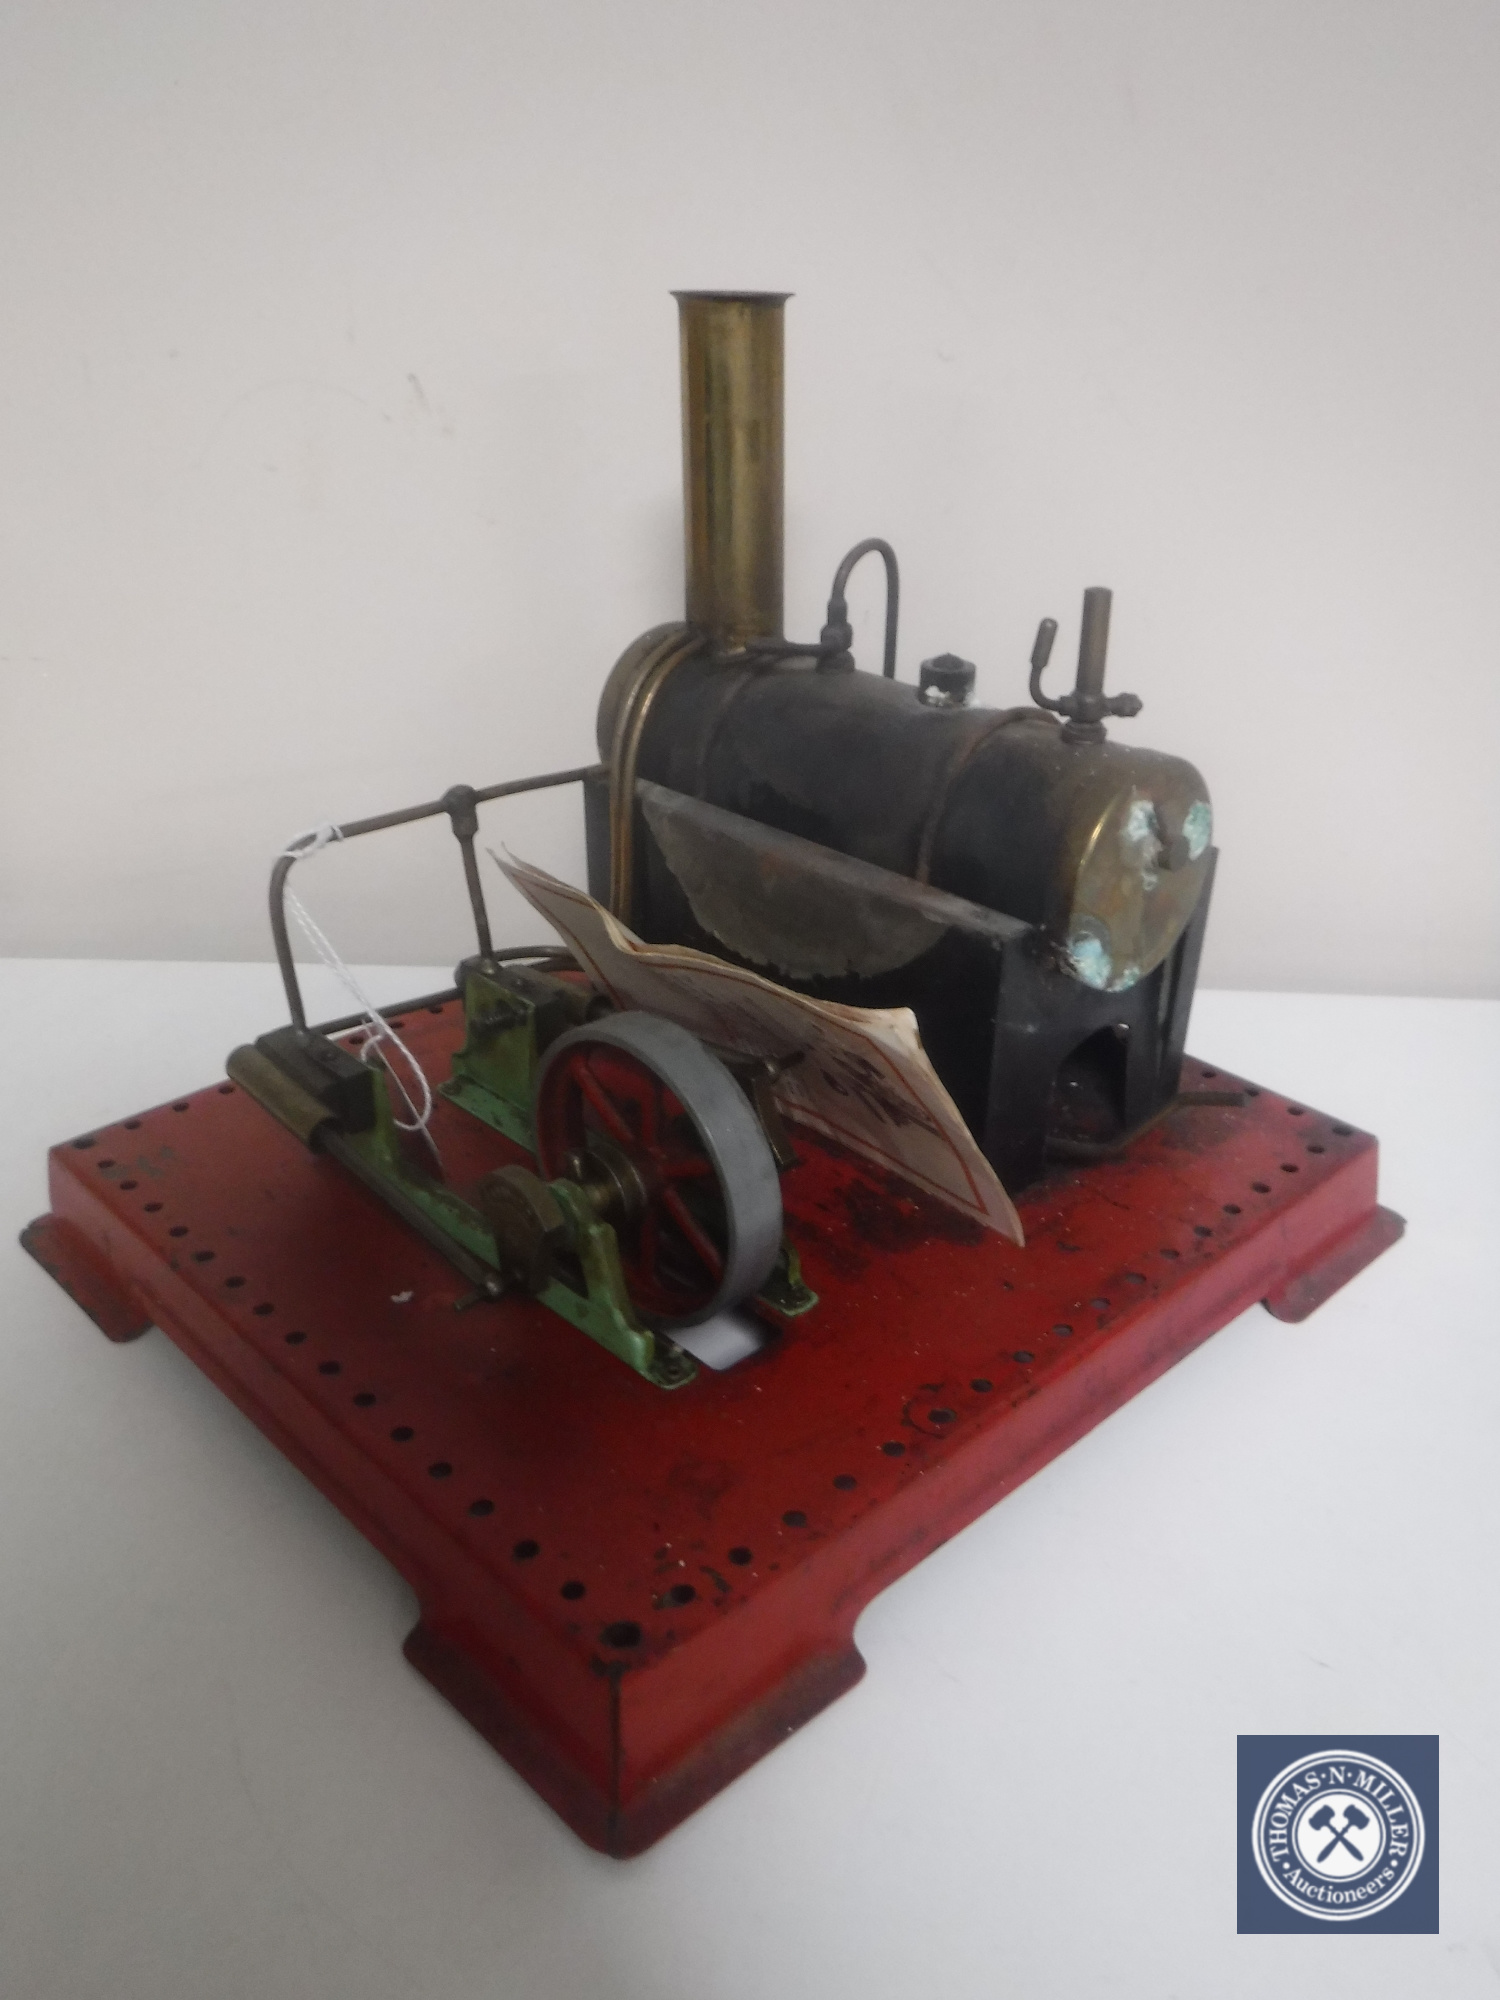 A scratch built Mamod steam engine